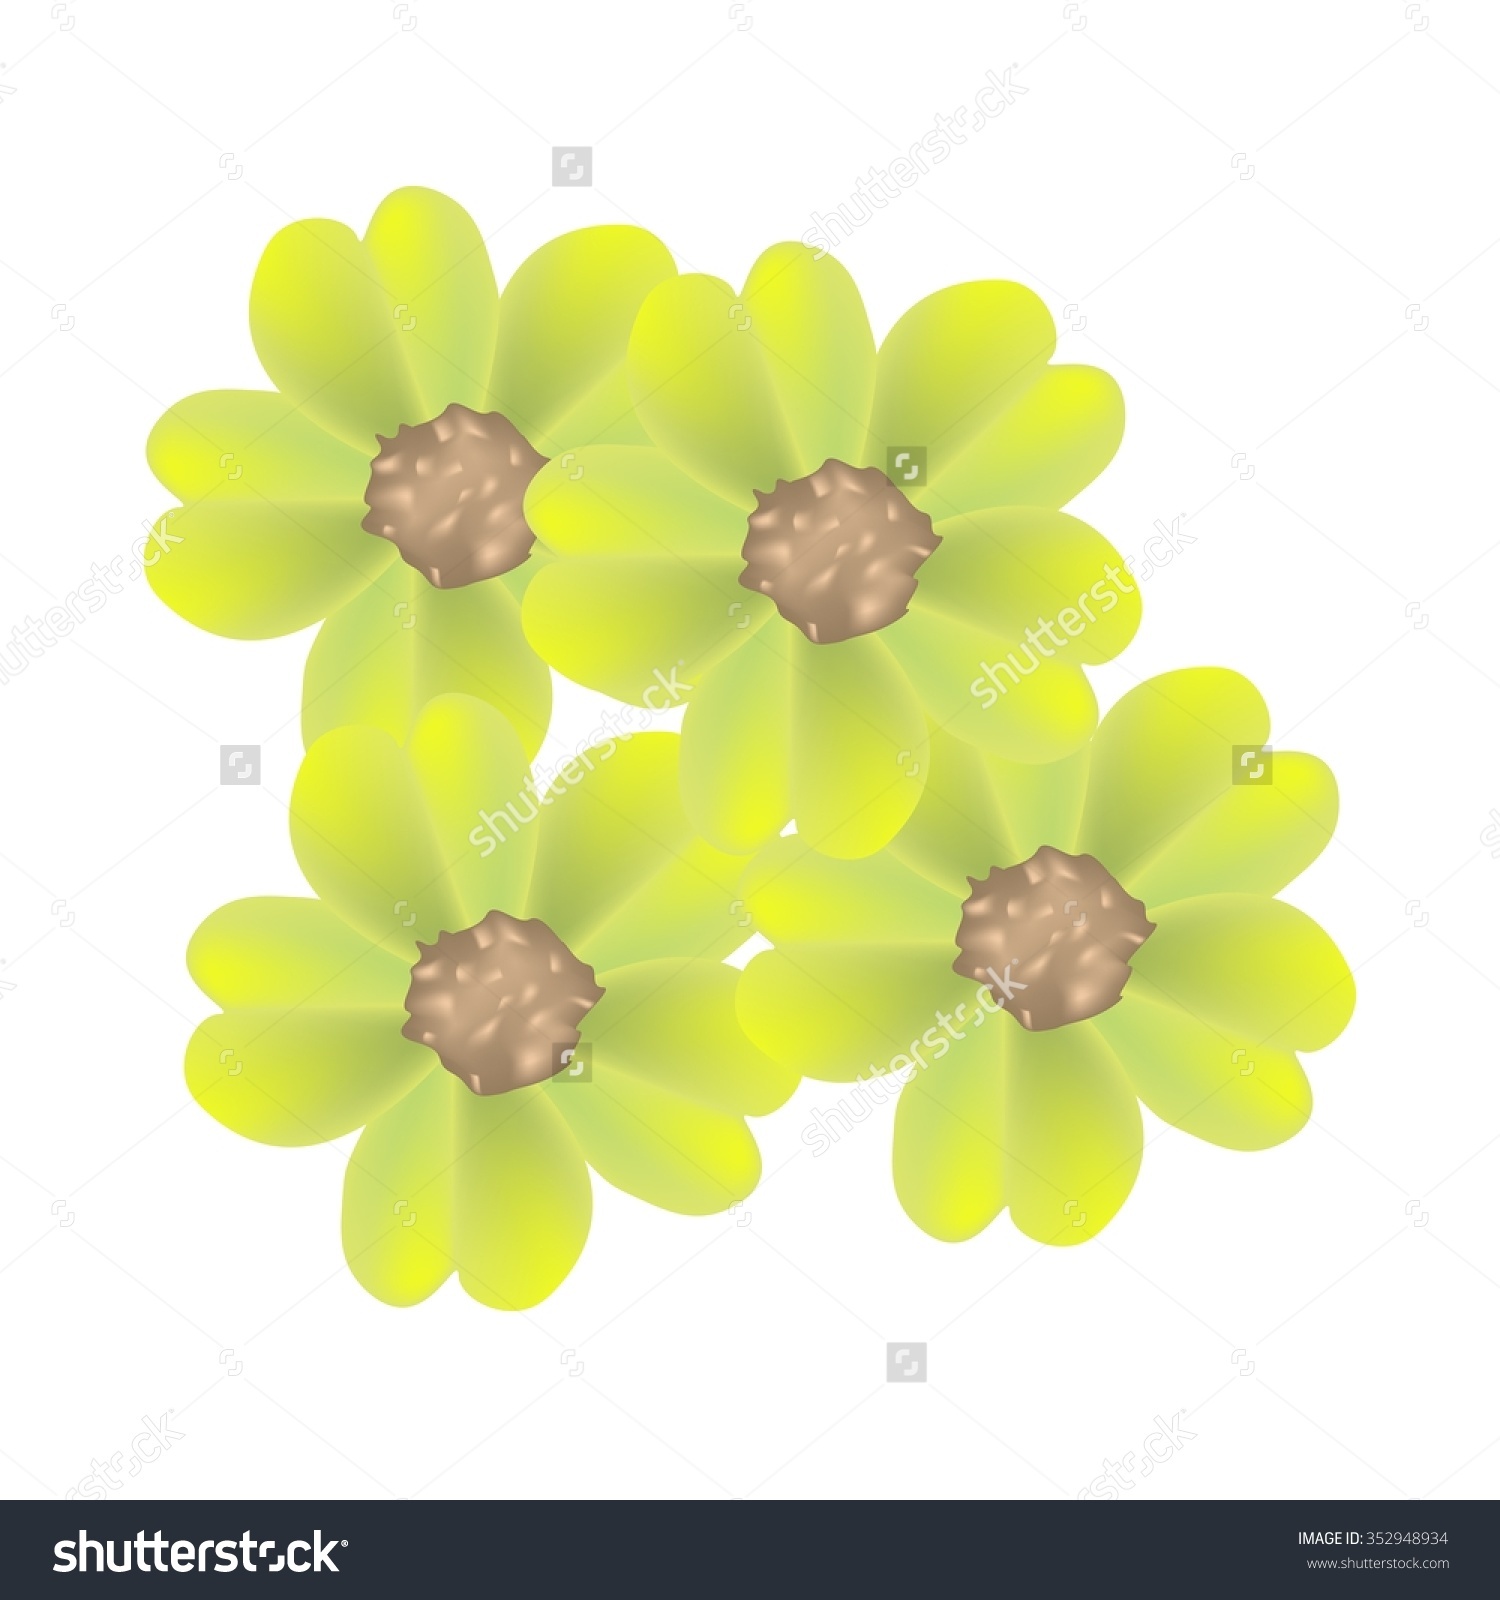 Beautiful Flower, Illustration Of Beautiful Yellow Yarrow Flowers.